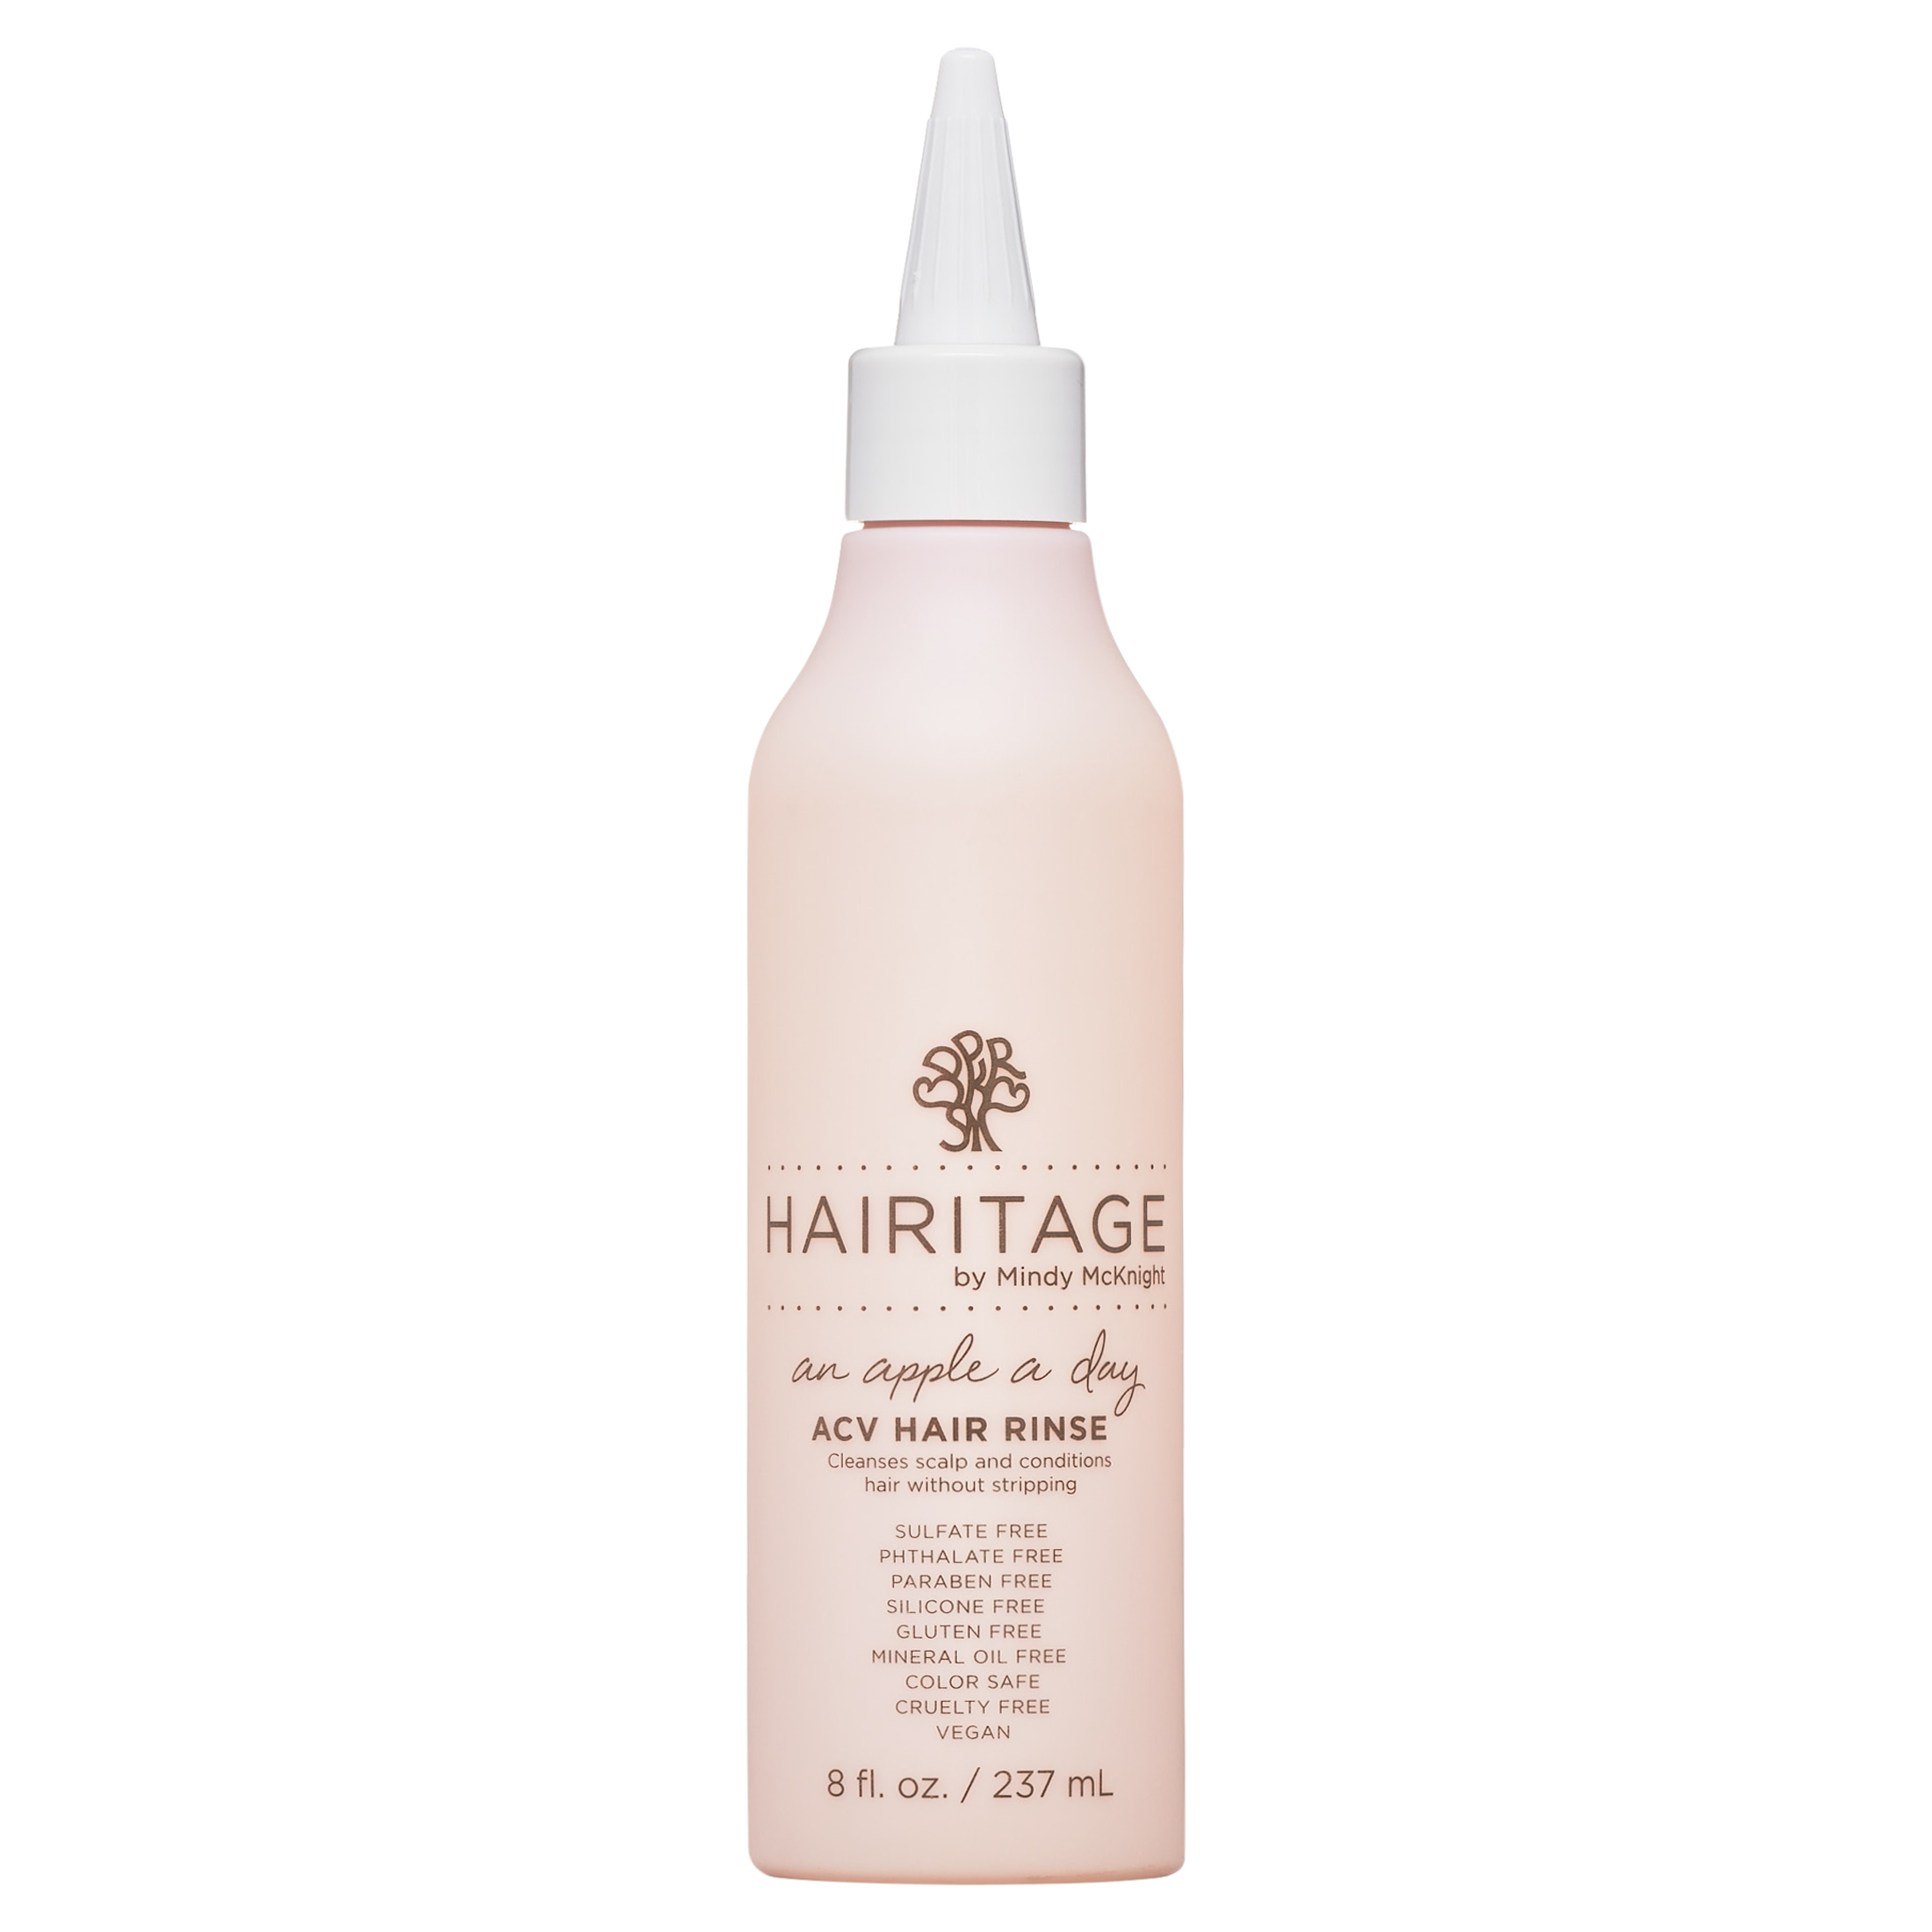 Hairitage Apple A Day Apple Cider Vinegar Sulfate-Free Shampoo Hair Rinse & Scalp Scrub, 8 oz. - image 1 of 8